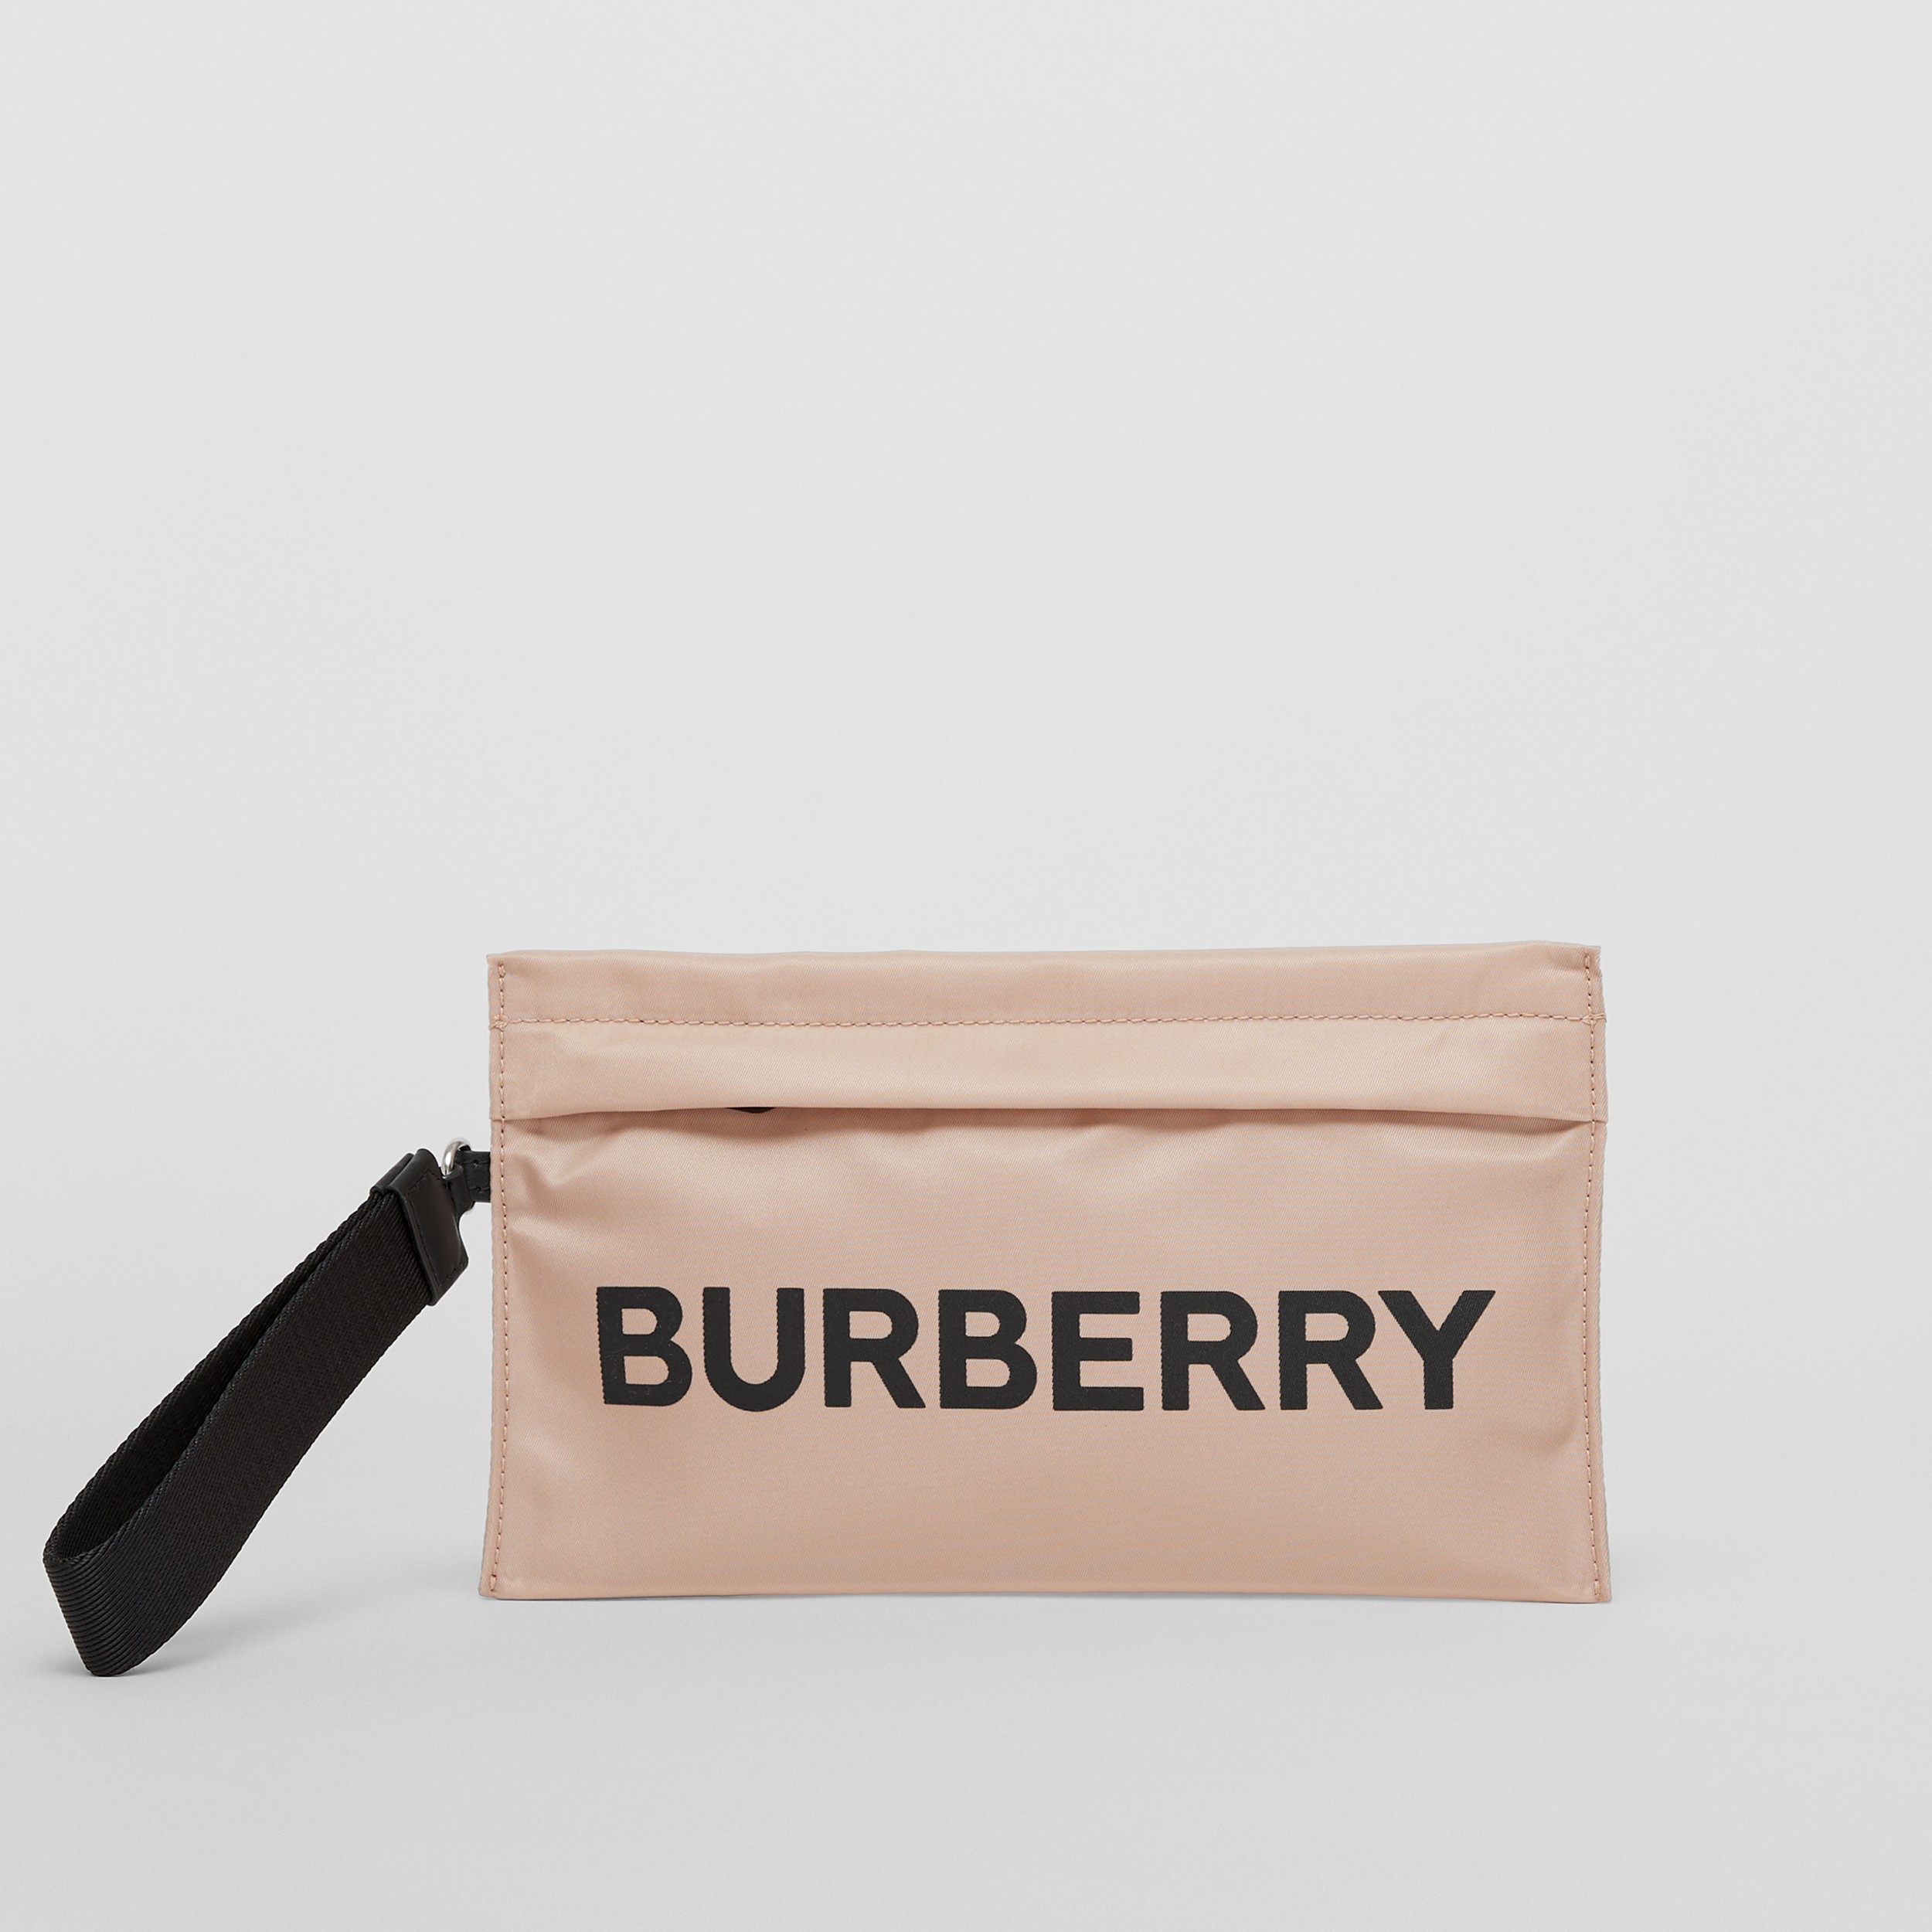 Etui aus Nylonmischung mit Burberry-Logo (Beige-rosa) - Damen | Burberry® - 1